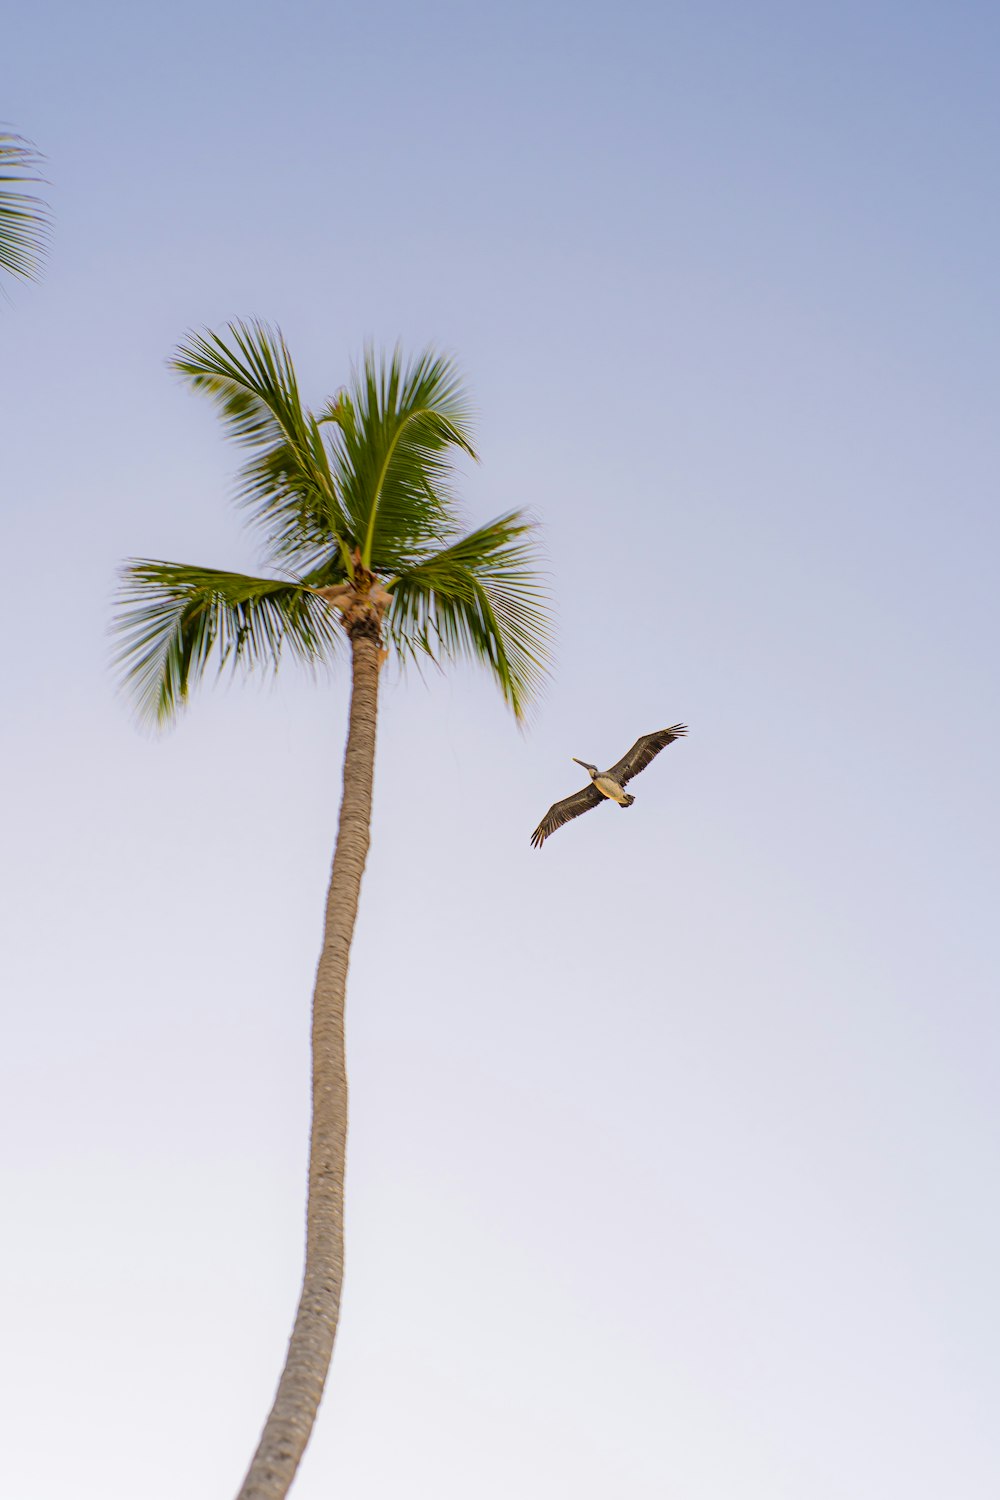 a bird is flying near a palm tree